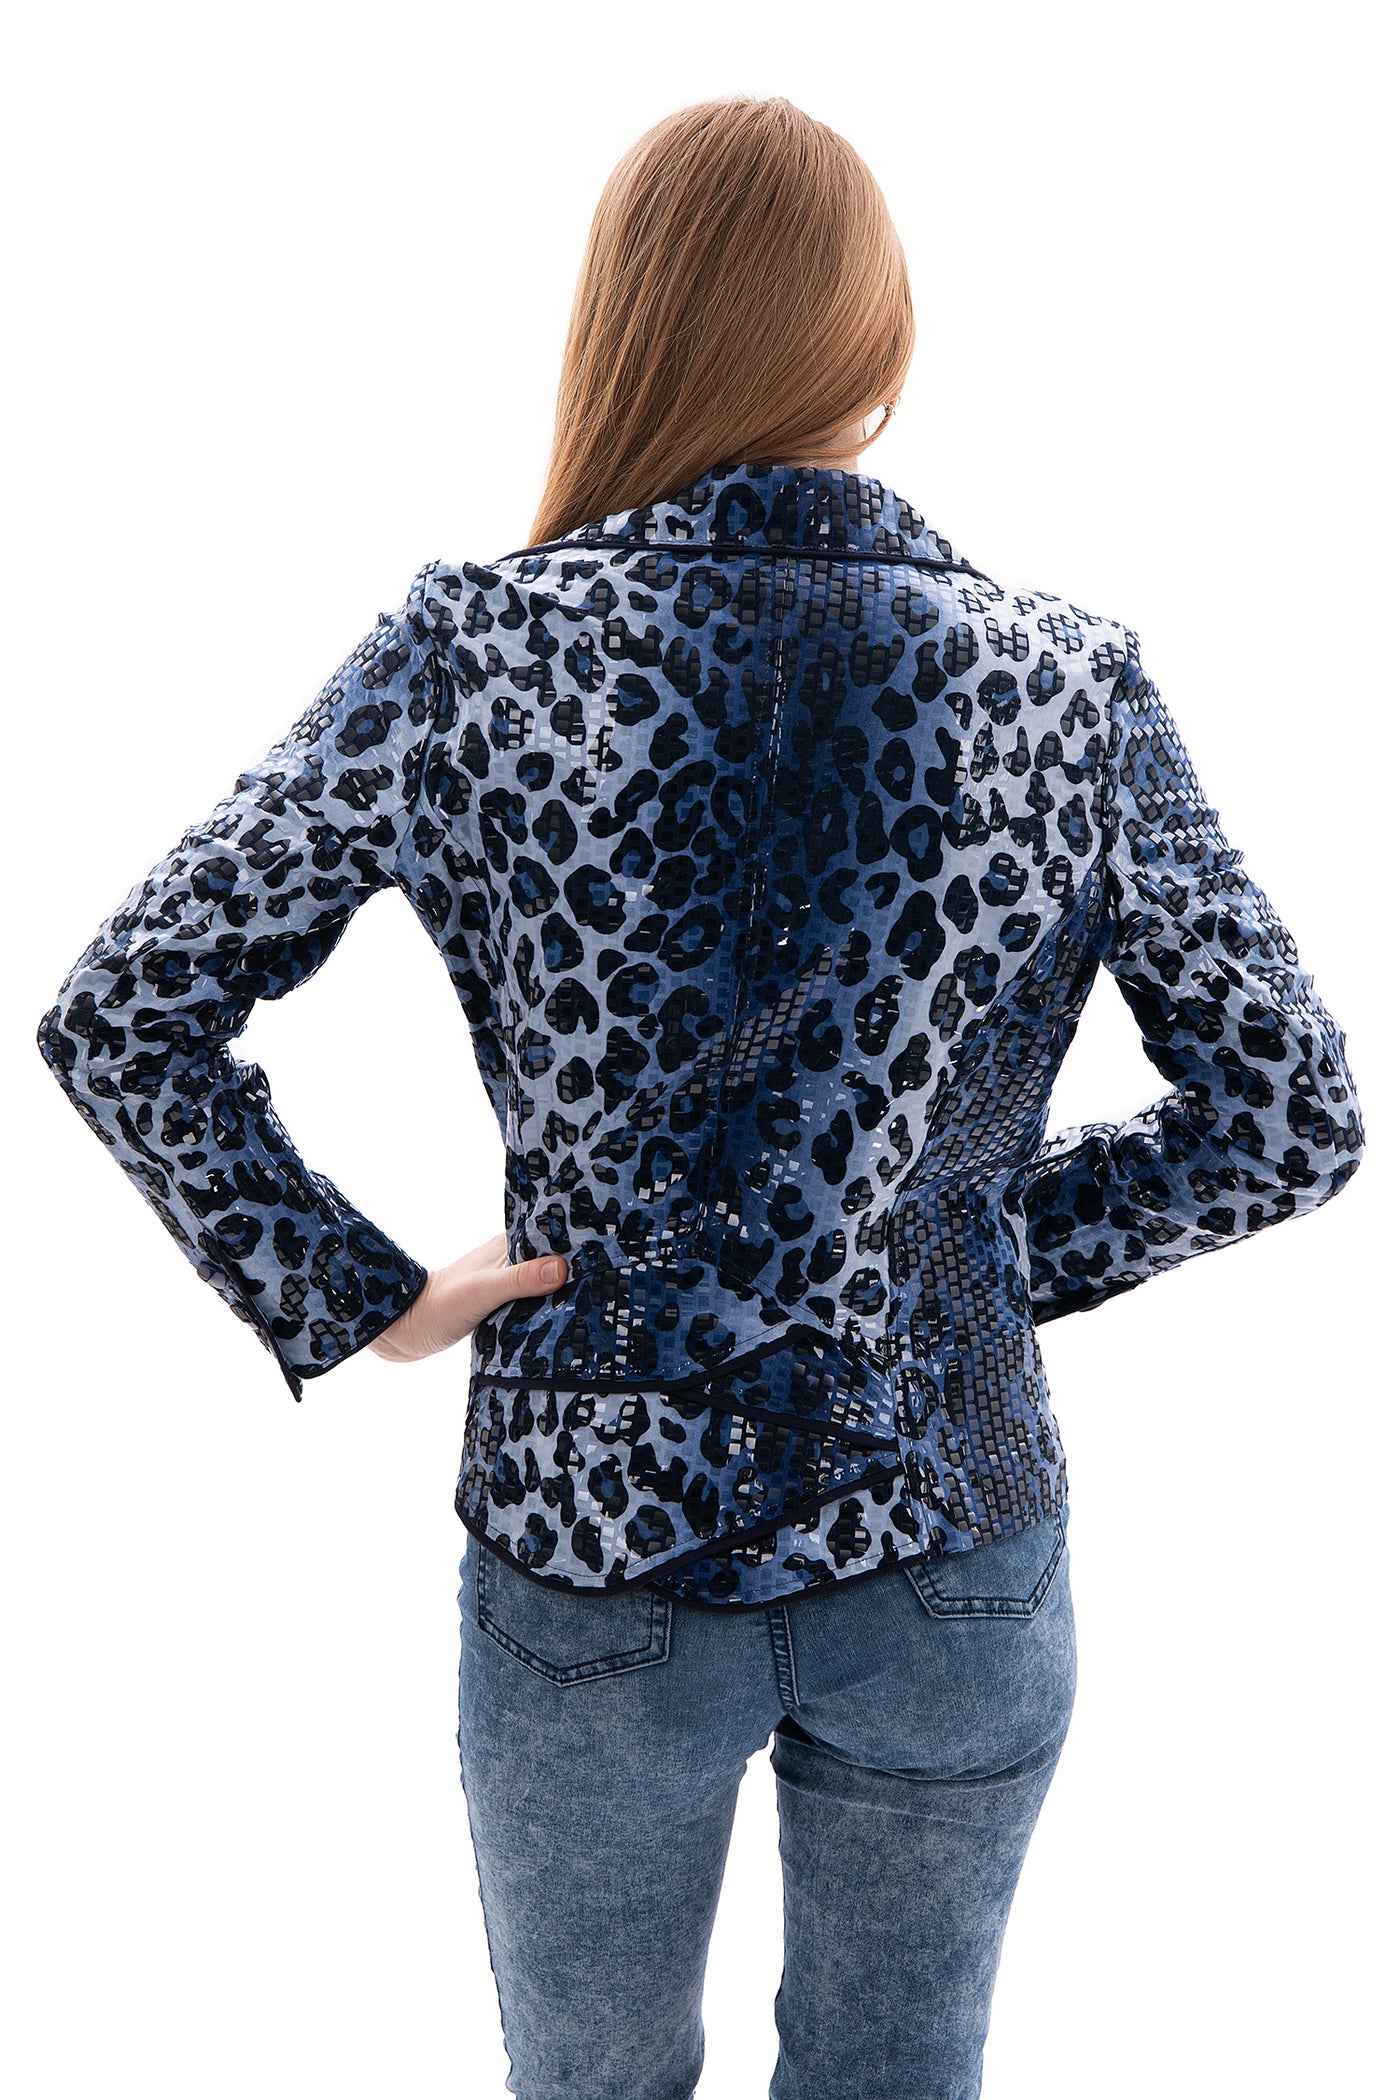 Clara S. Blue Leopard Print Jacket